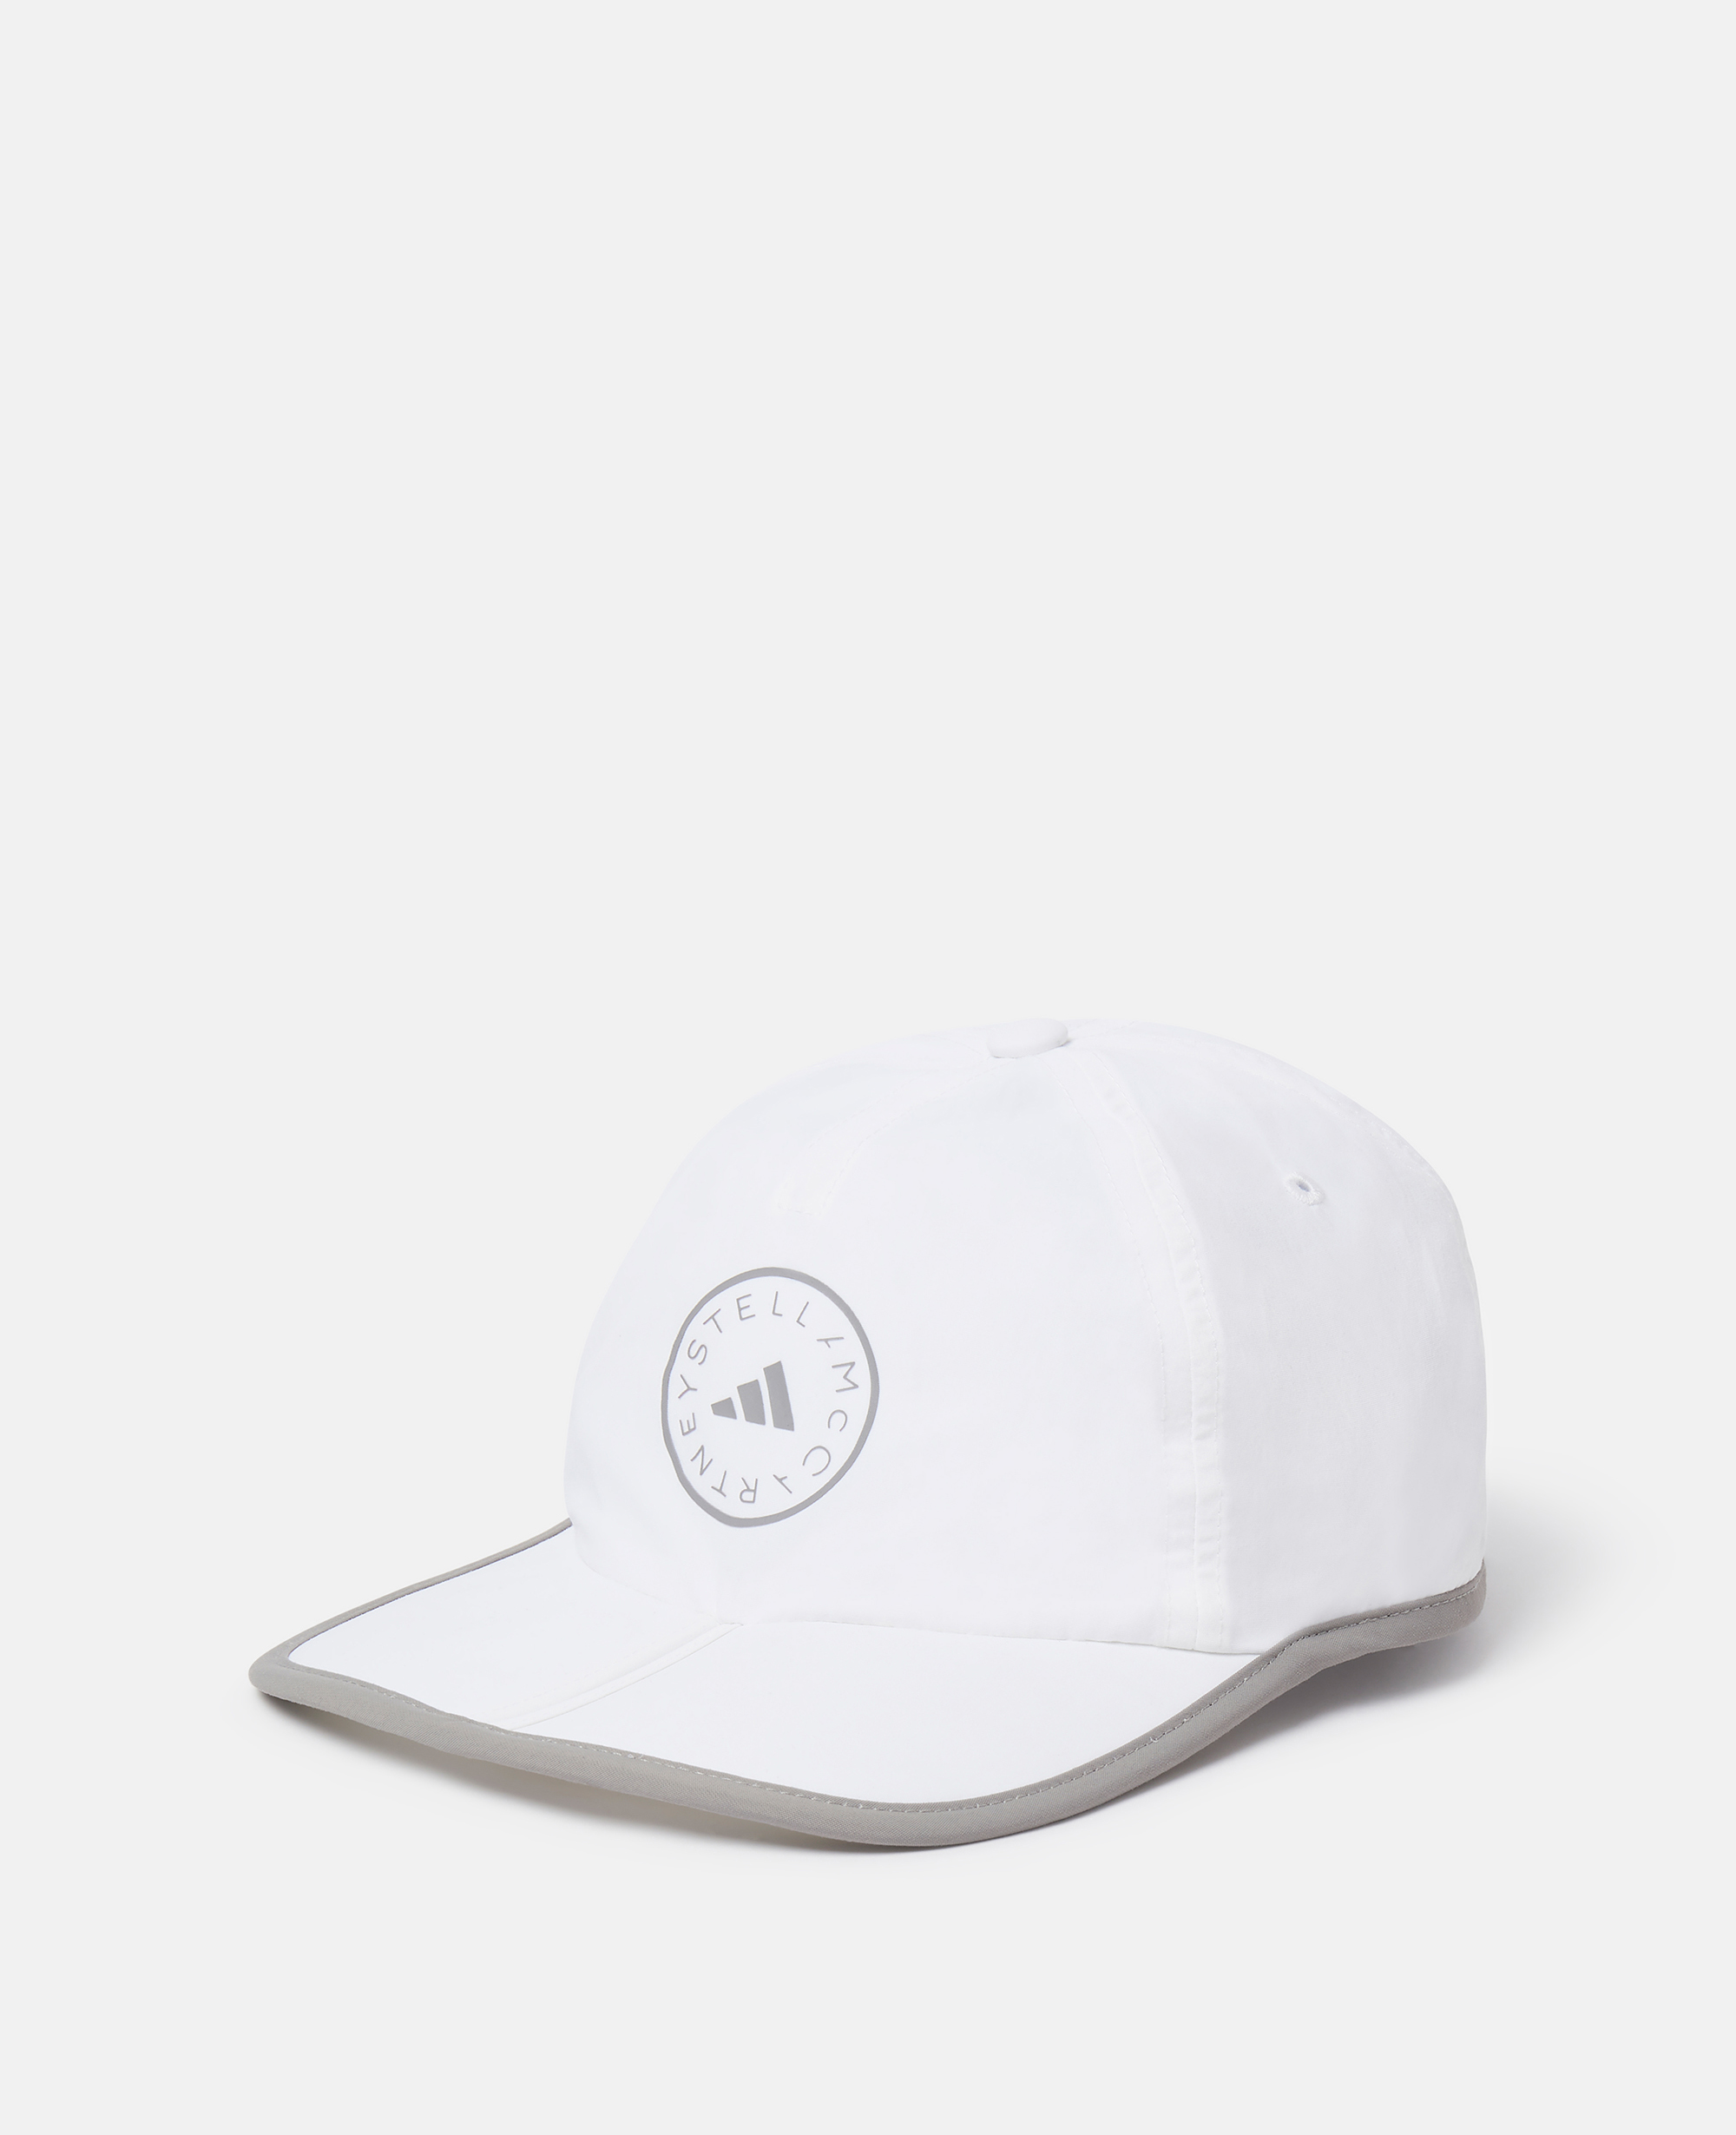 stella mccartney - casquette de baseball, femme, blanc/gris tourterelle